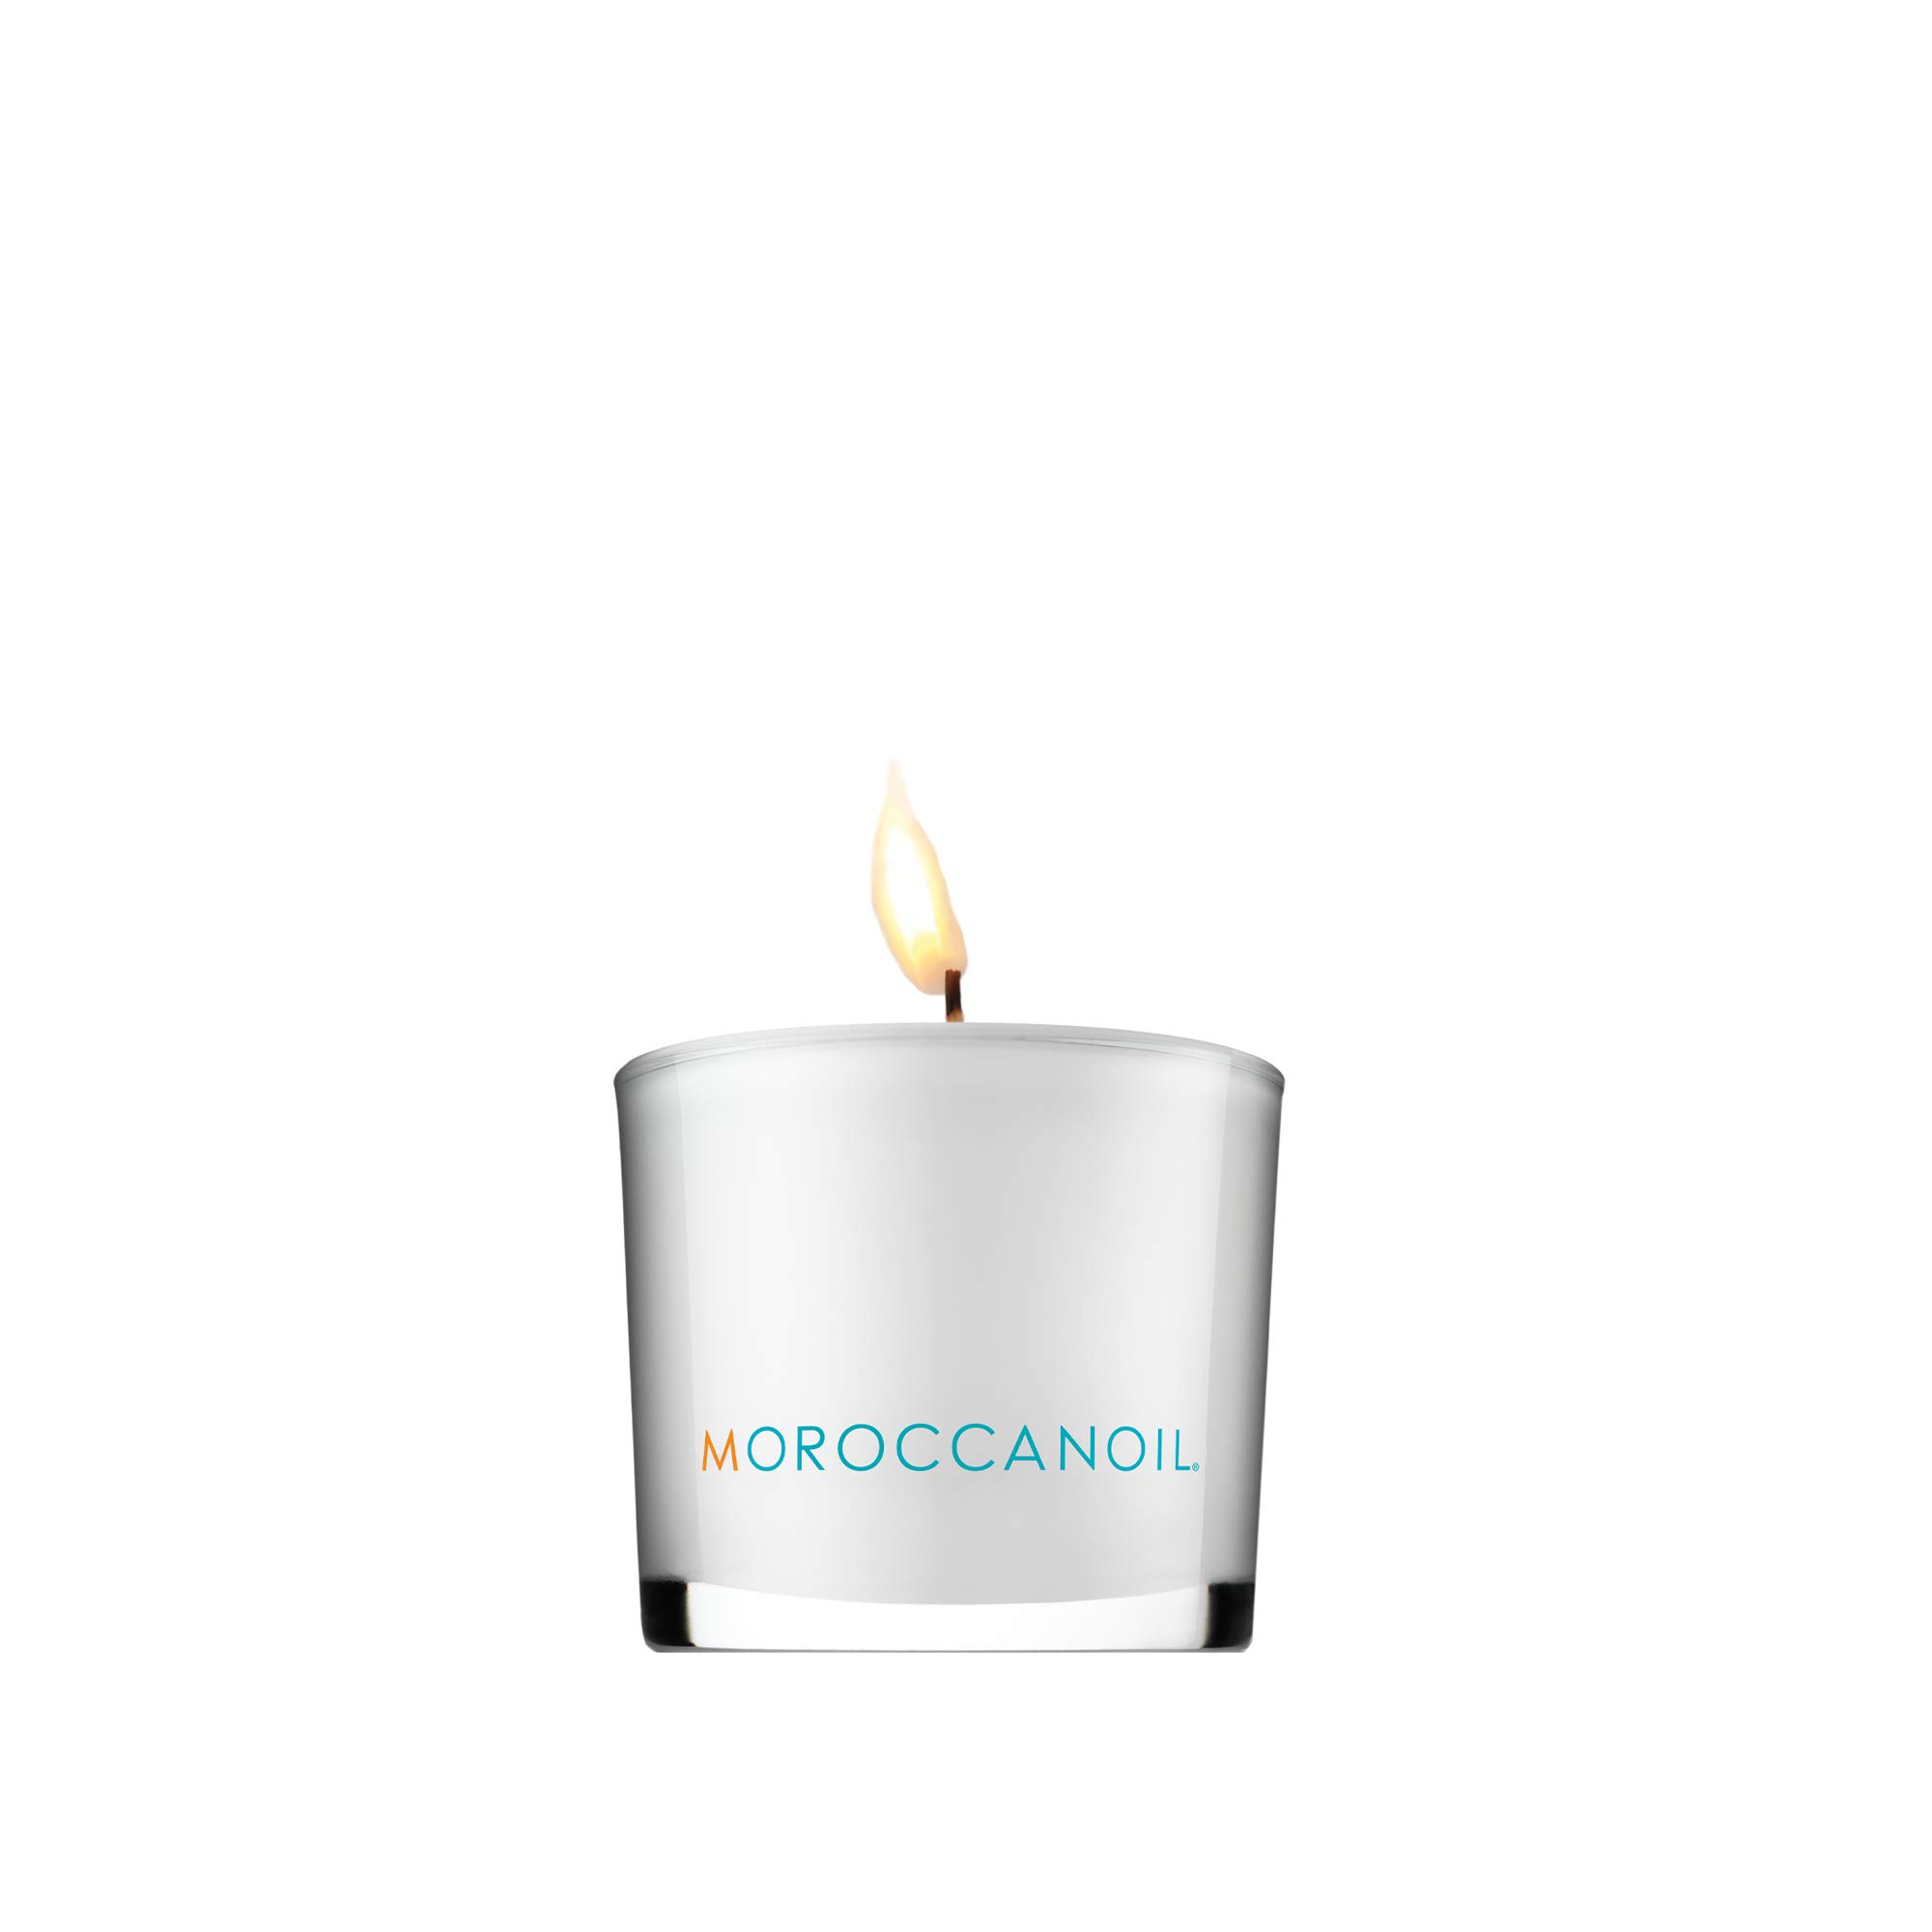 Moroccanoil Candle, Fragrance Originale